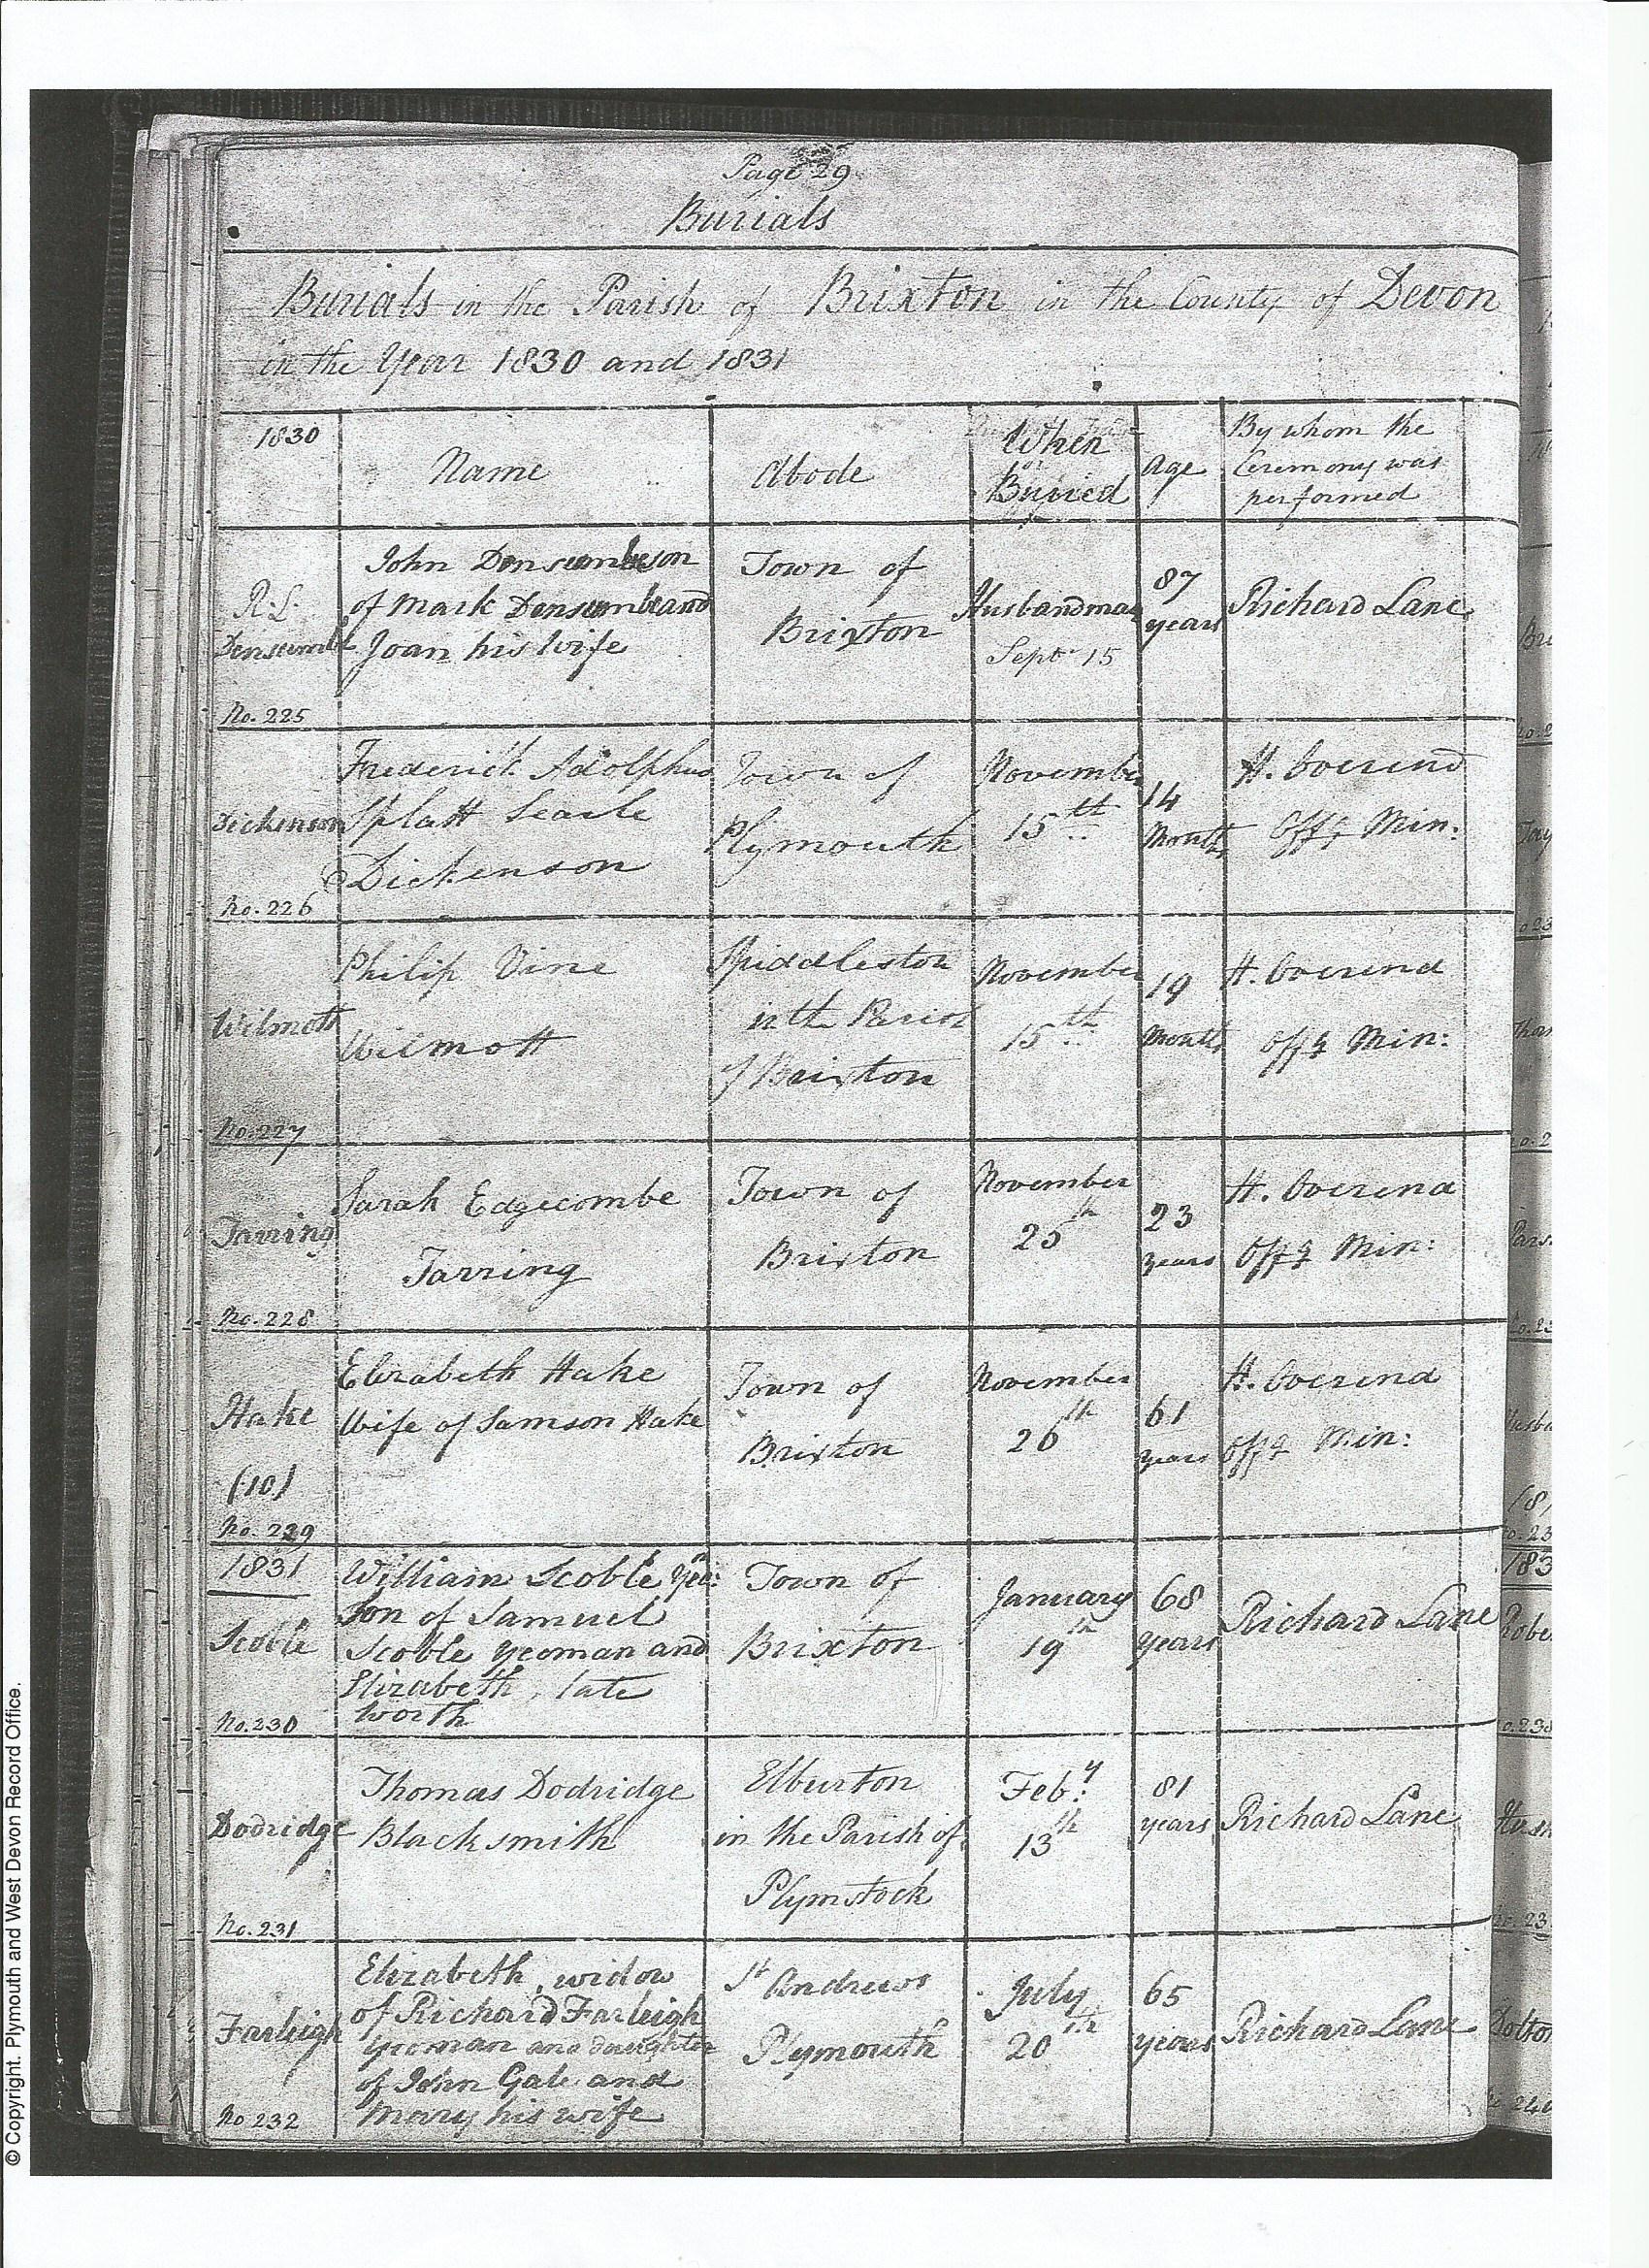 C:\Users\Virginia Rundle\Documents\Ancestry\Northey Moar Files\Doddridge\Ingrid's documents\Thomas Doddridge and Mary Dyer\Burial of Thomas Dodridge Brixton Feb 13 1831.jpg